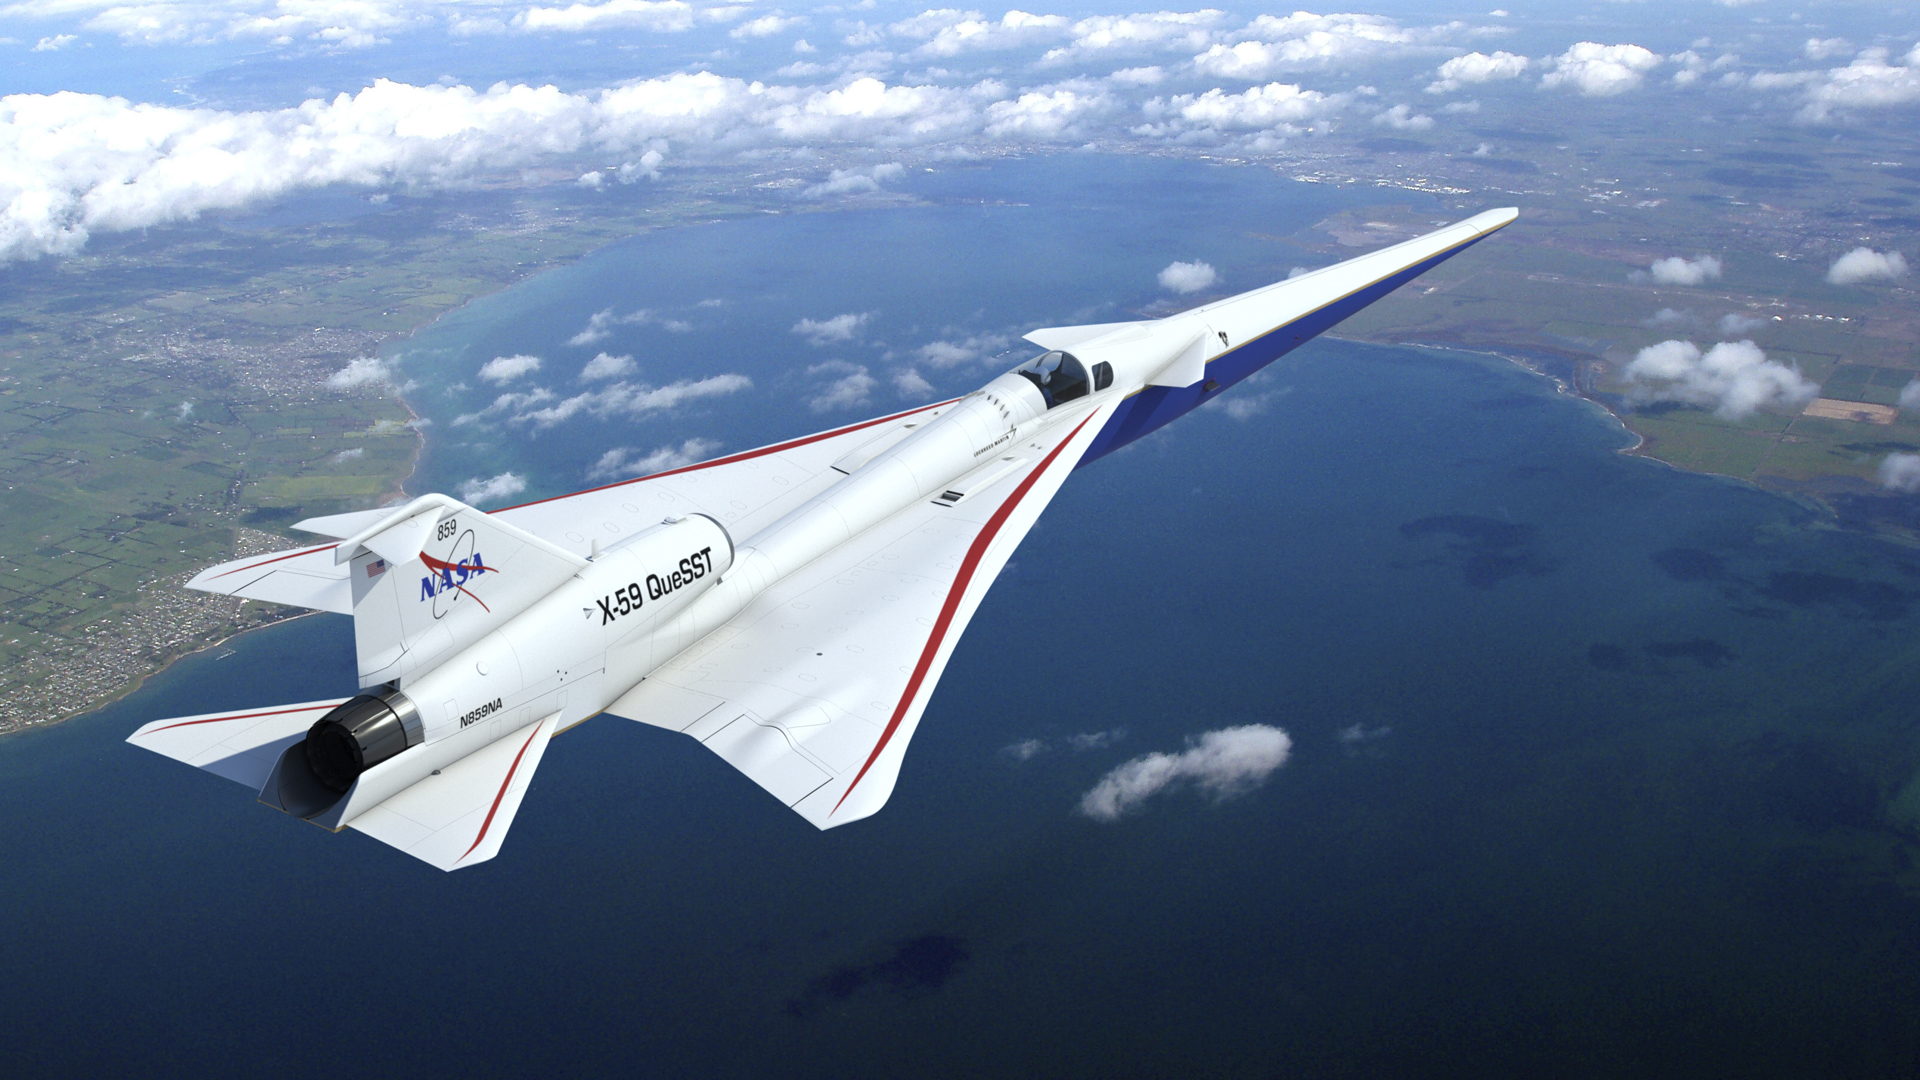 Artist concept of NASA's Quiet SuperSonic Technology jet in flight.